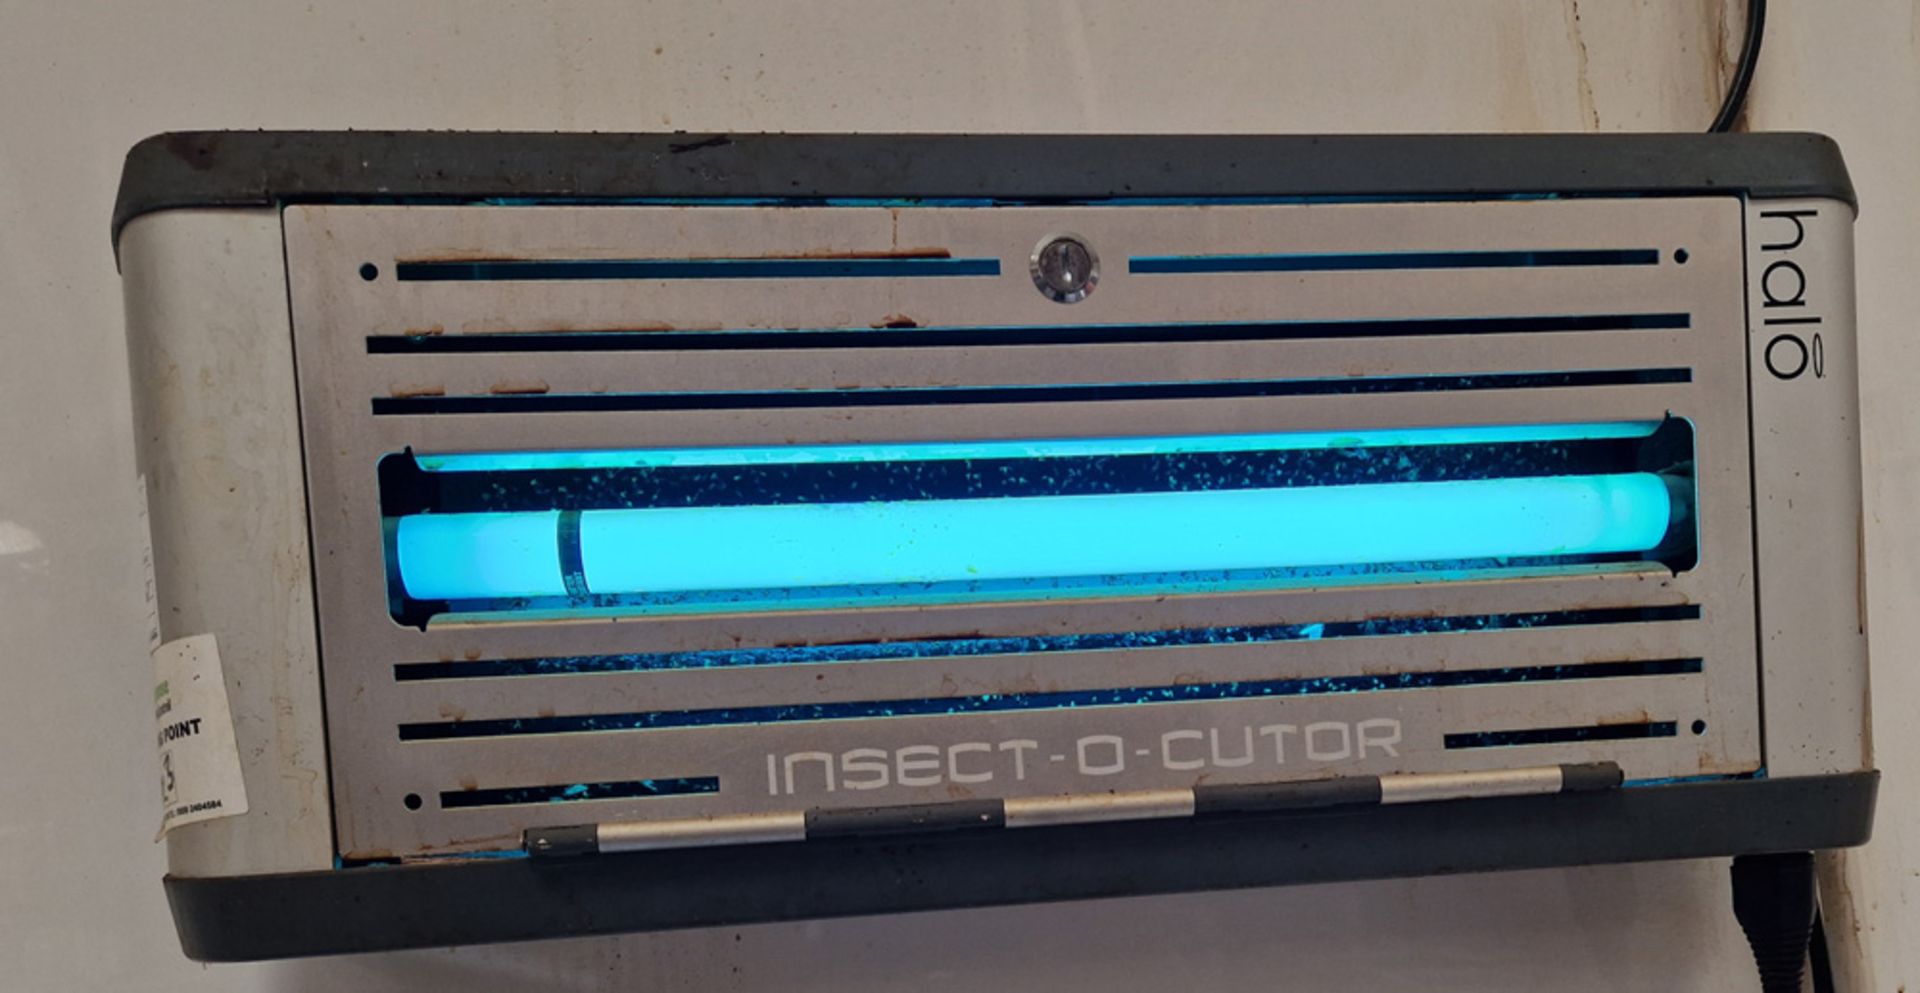 A HALO 2-Tube UV Insectocutor, One 2-Tube UV Insectocutor and One Single Tube UV Insectocutor - Image 3 of 3